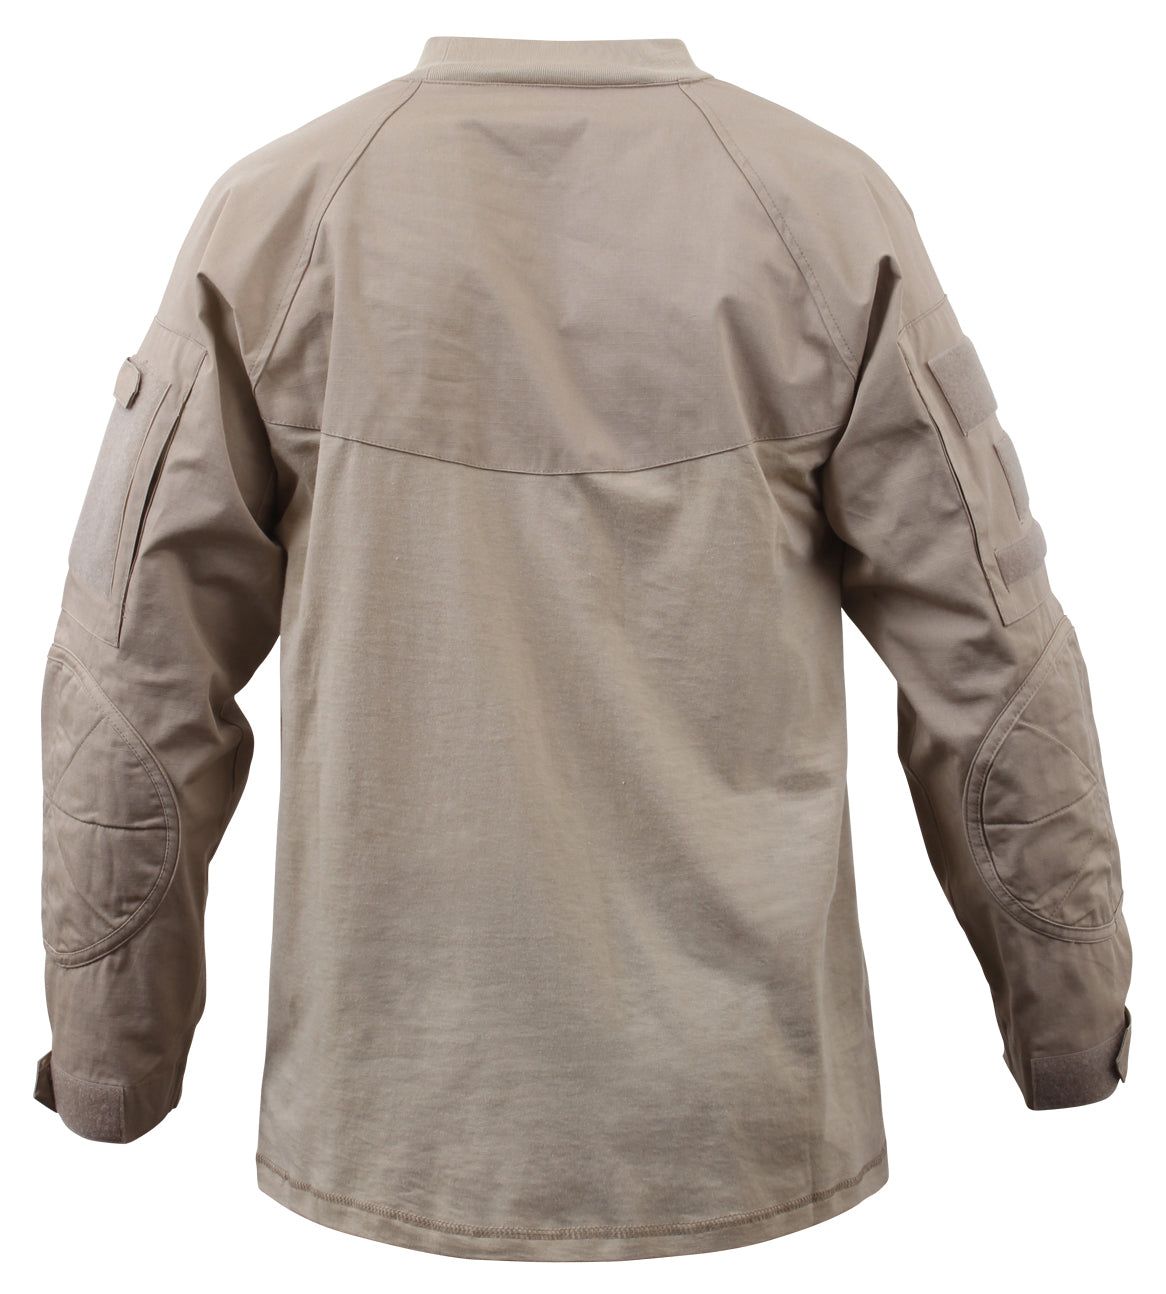 [Military][Fire Retardant] Acrylic/Cotton/Nylon/Cotton Combat Shirts